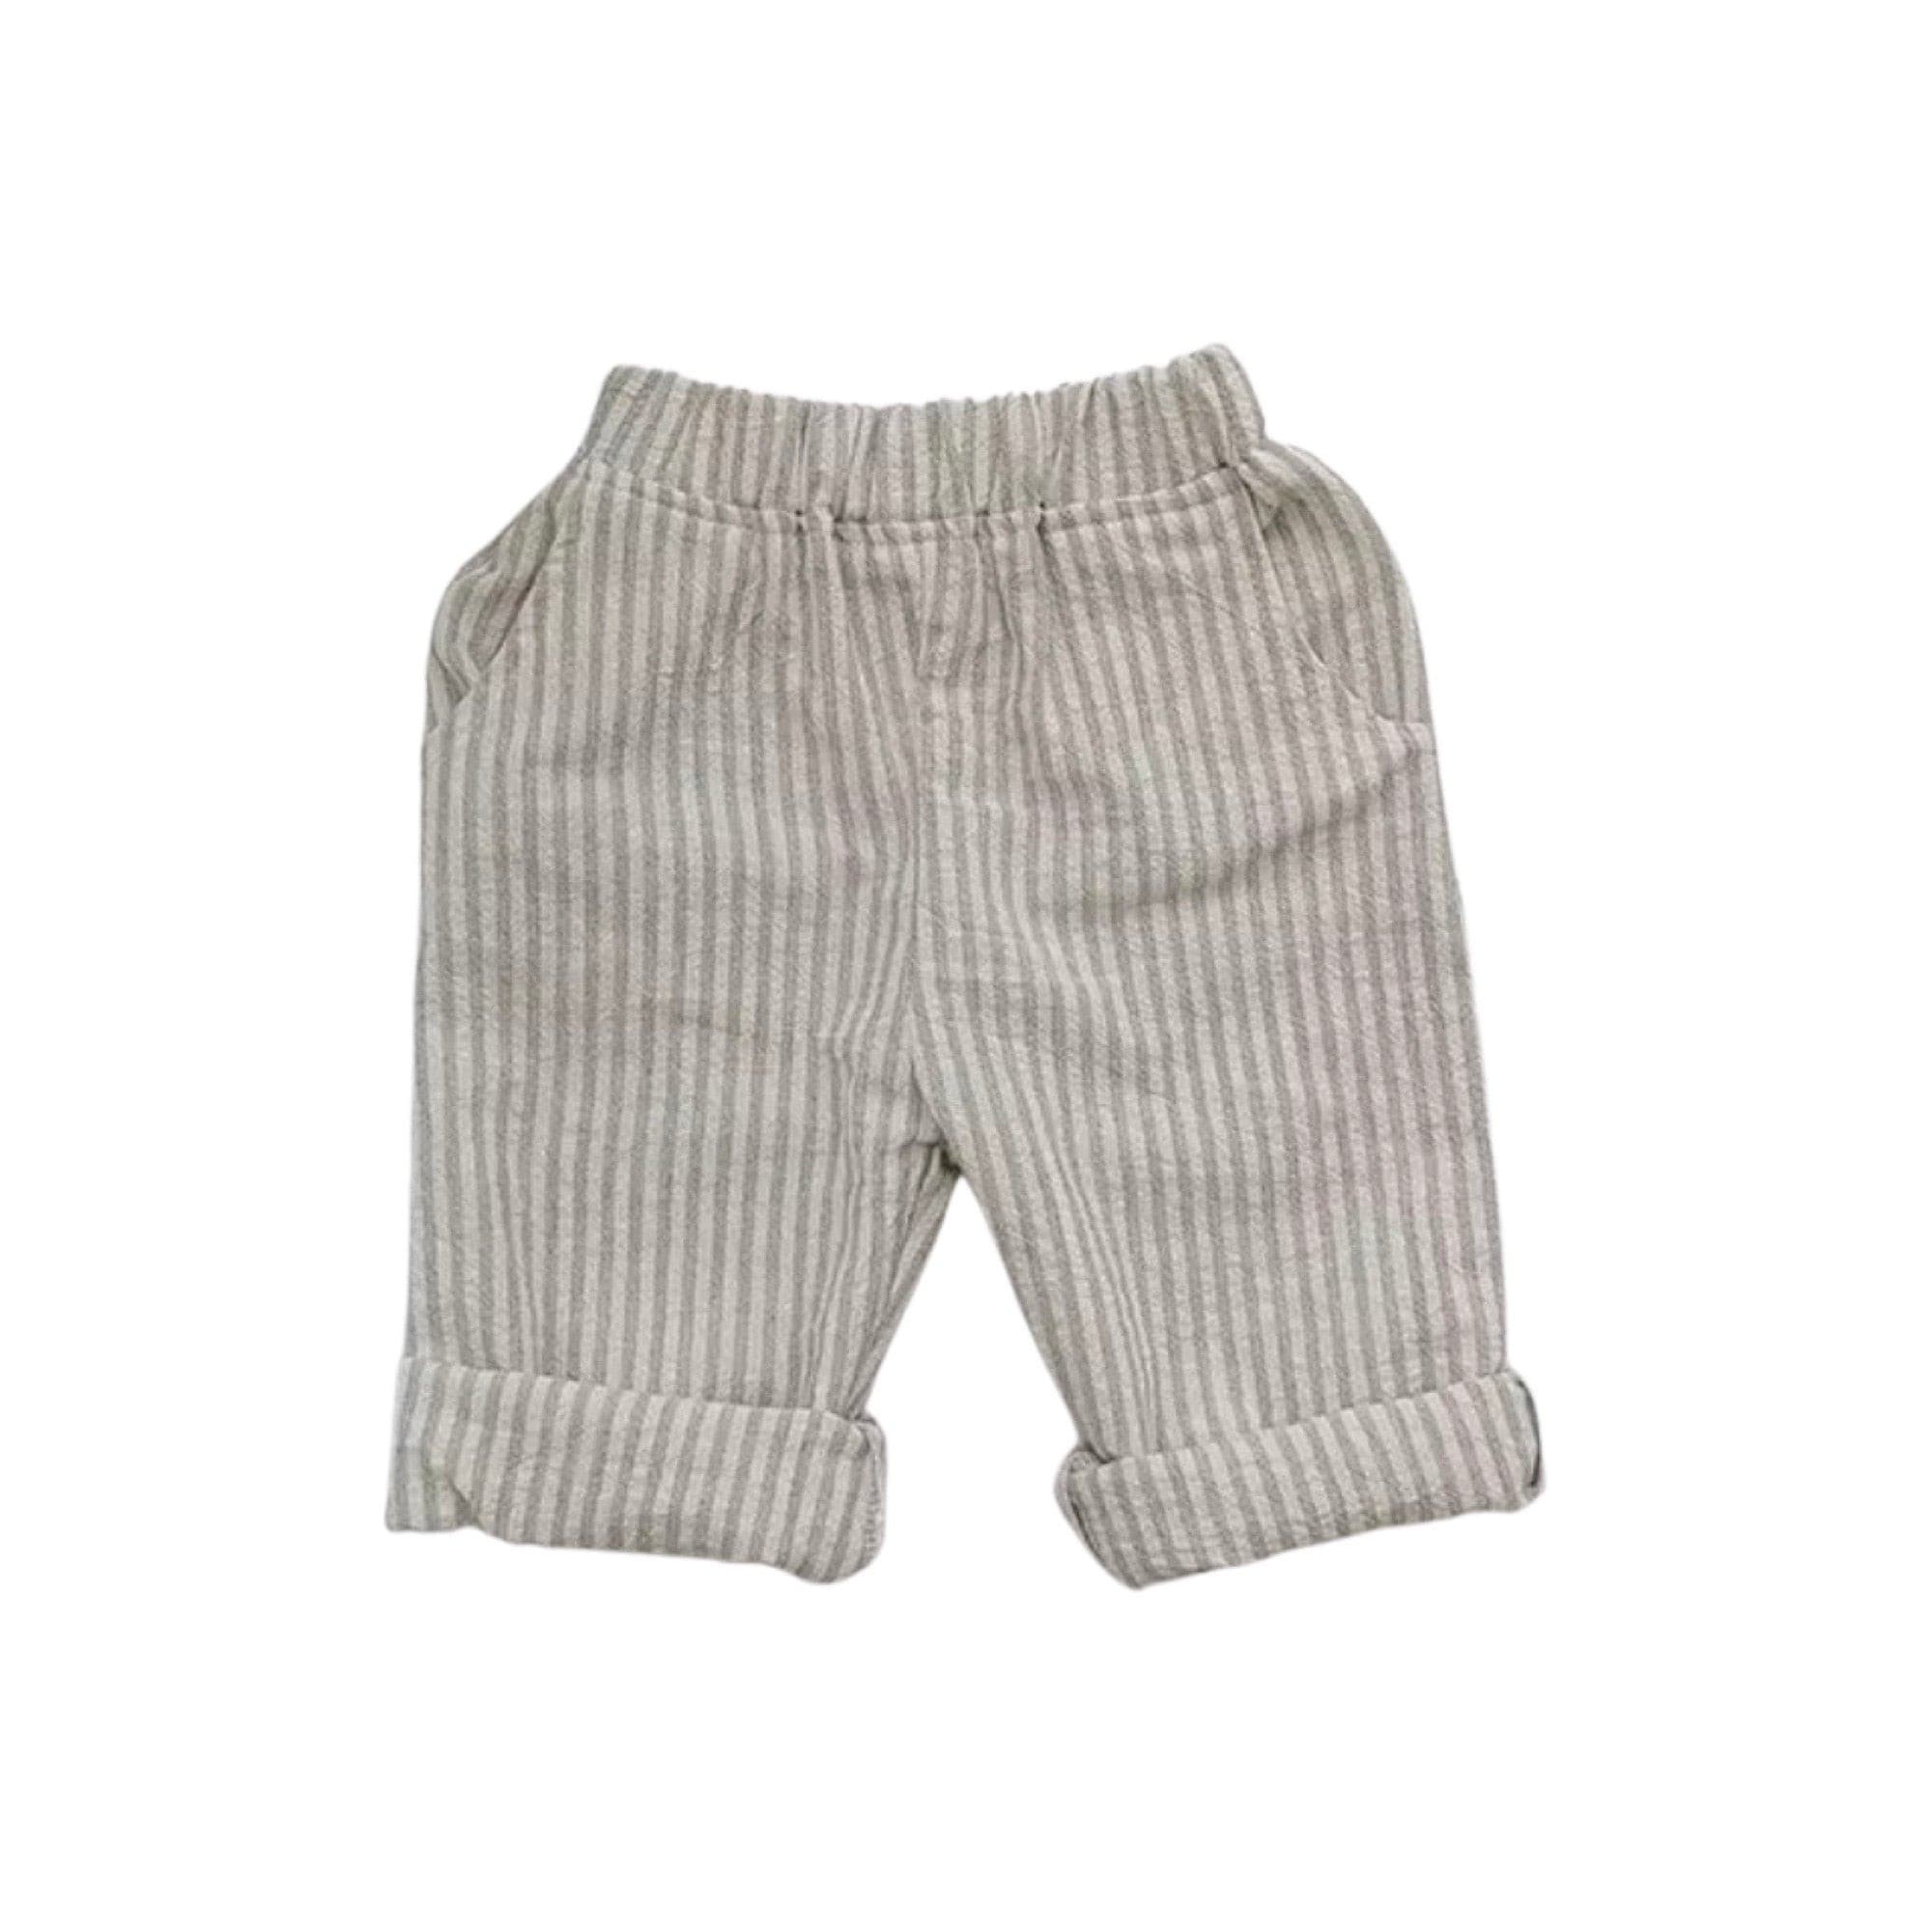 Linen Baby Pants - Beige Stripes.